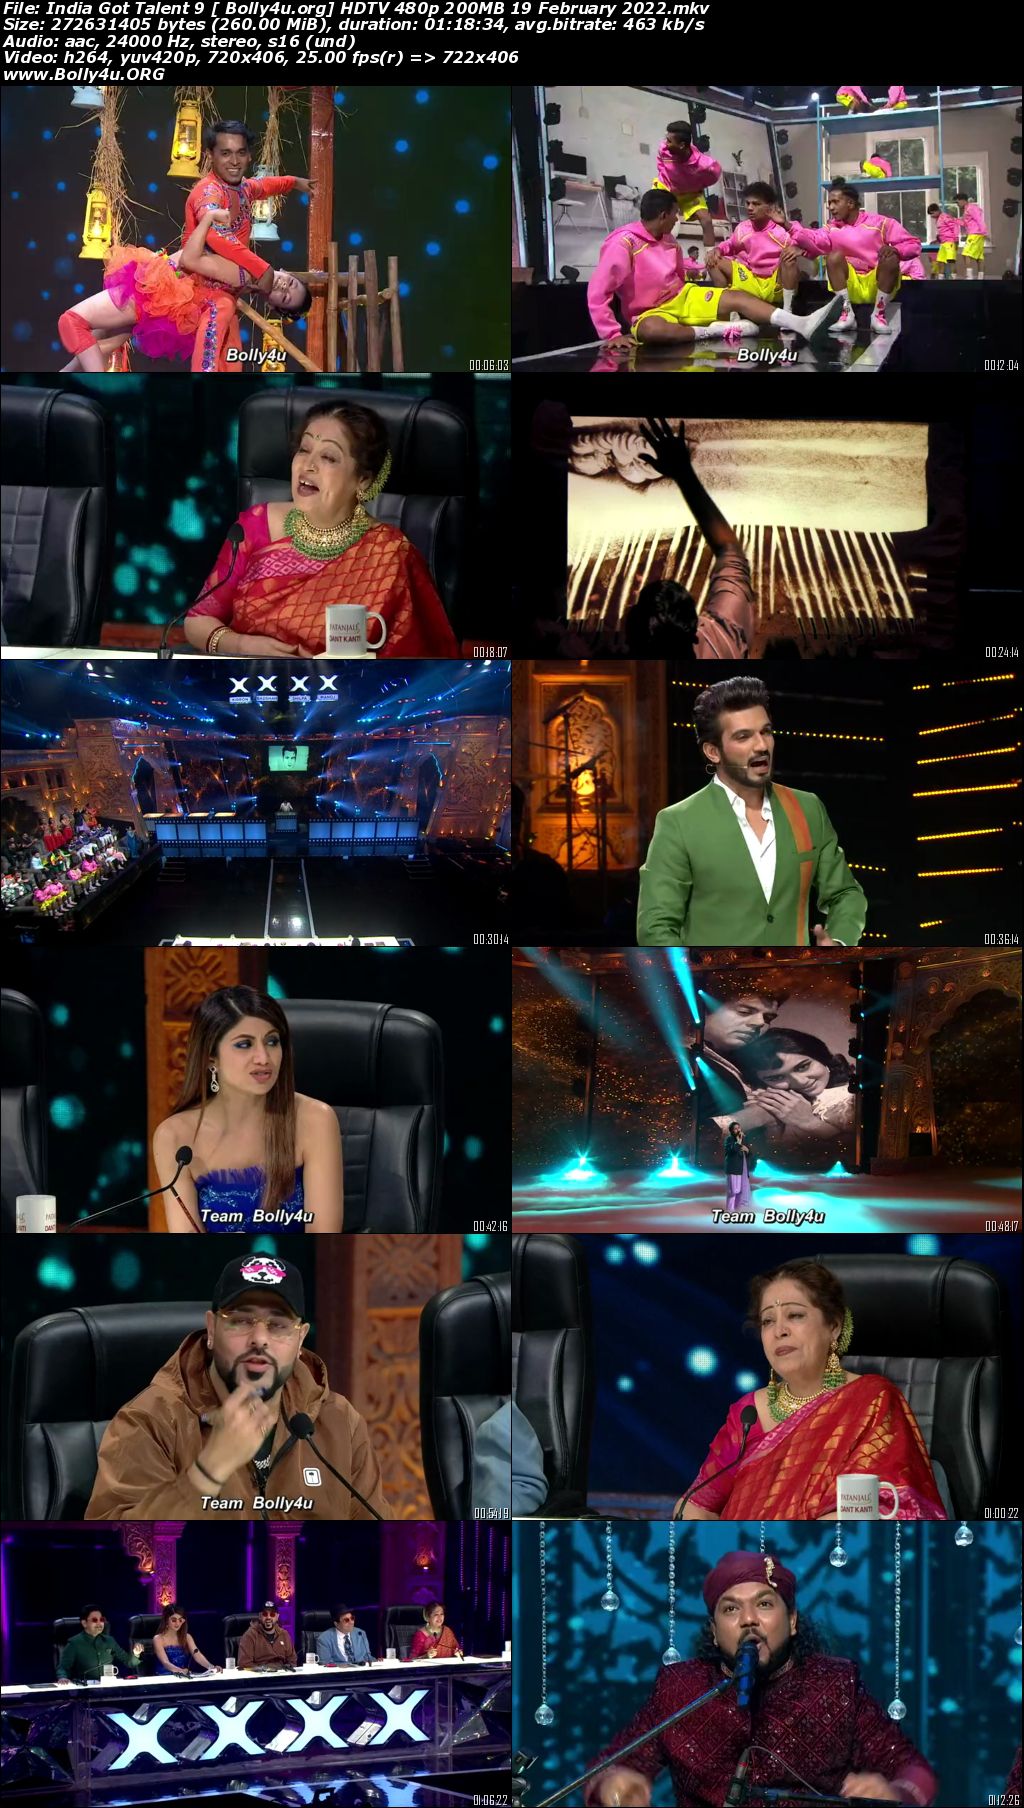 India Got Talent 9 HDTV 480p 200MB 19 February 2022 Download